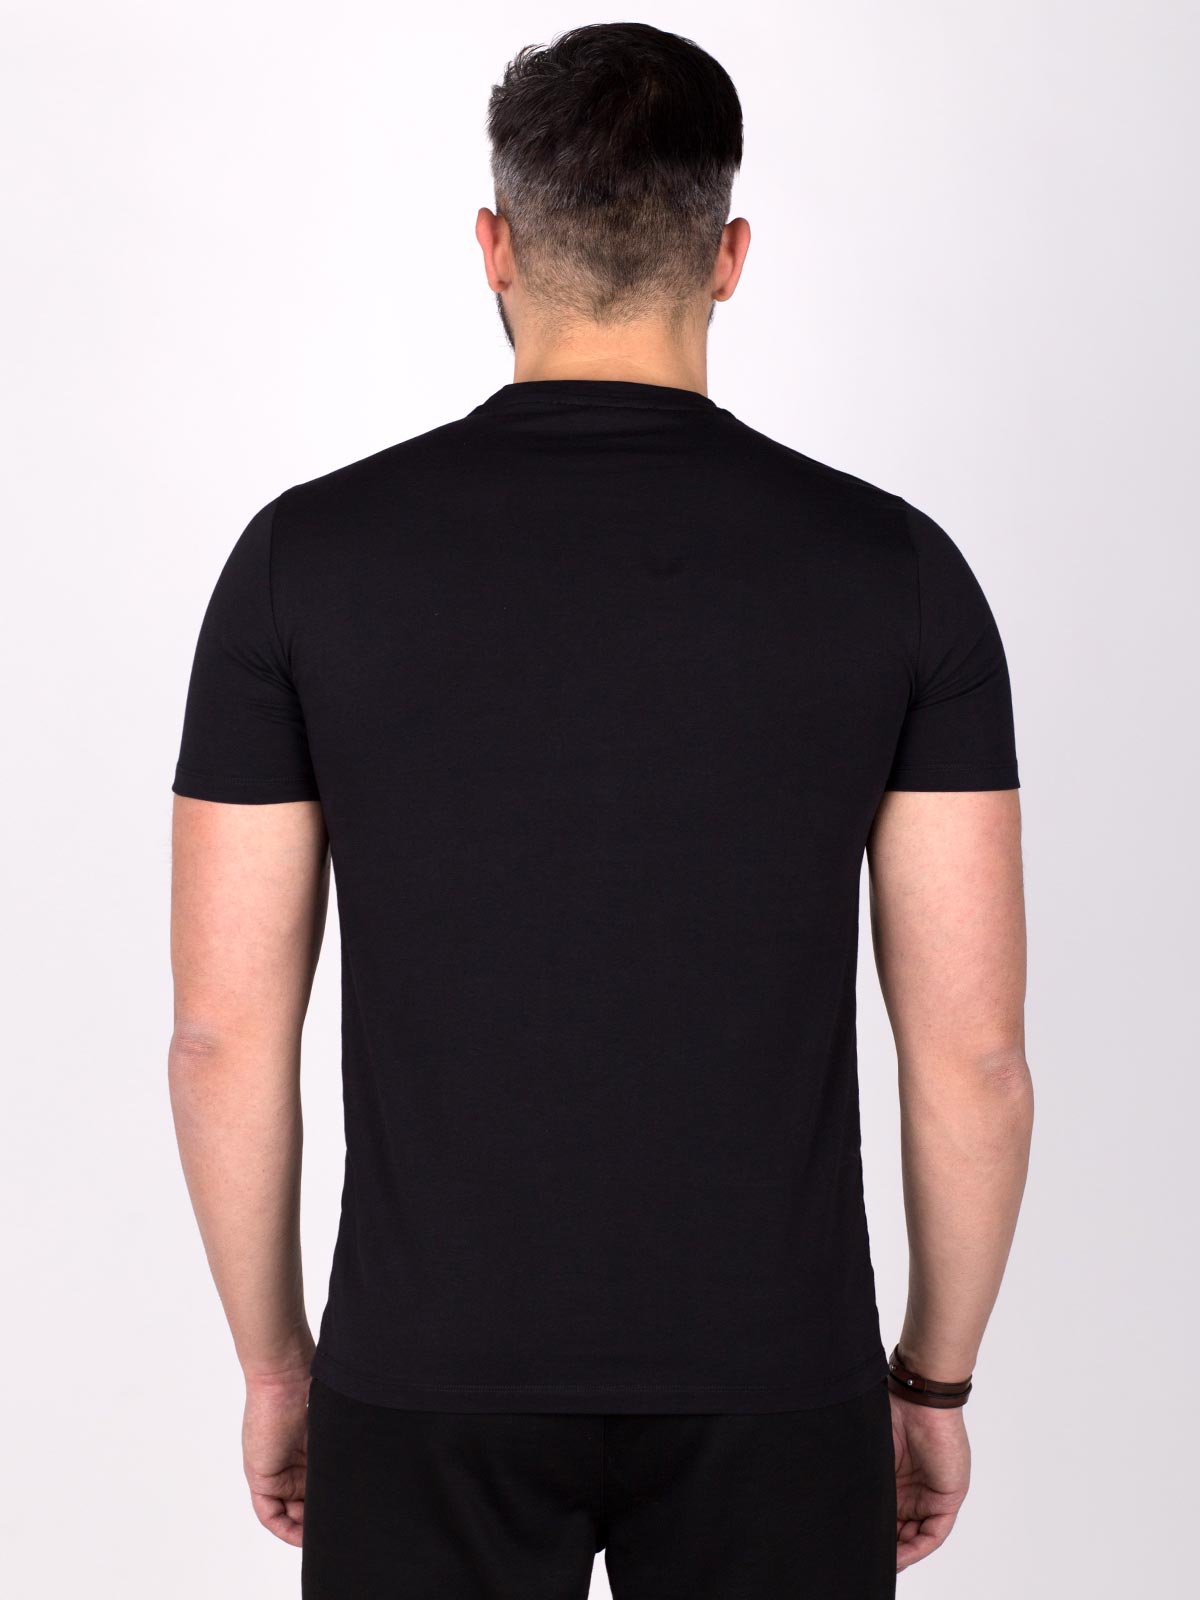 Tshirt with circle print - 96339 € 8.44 img4